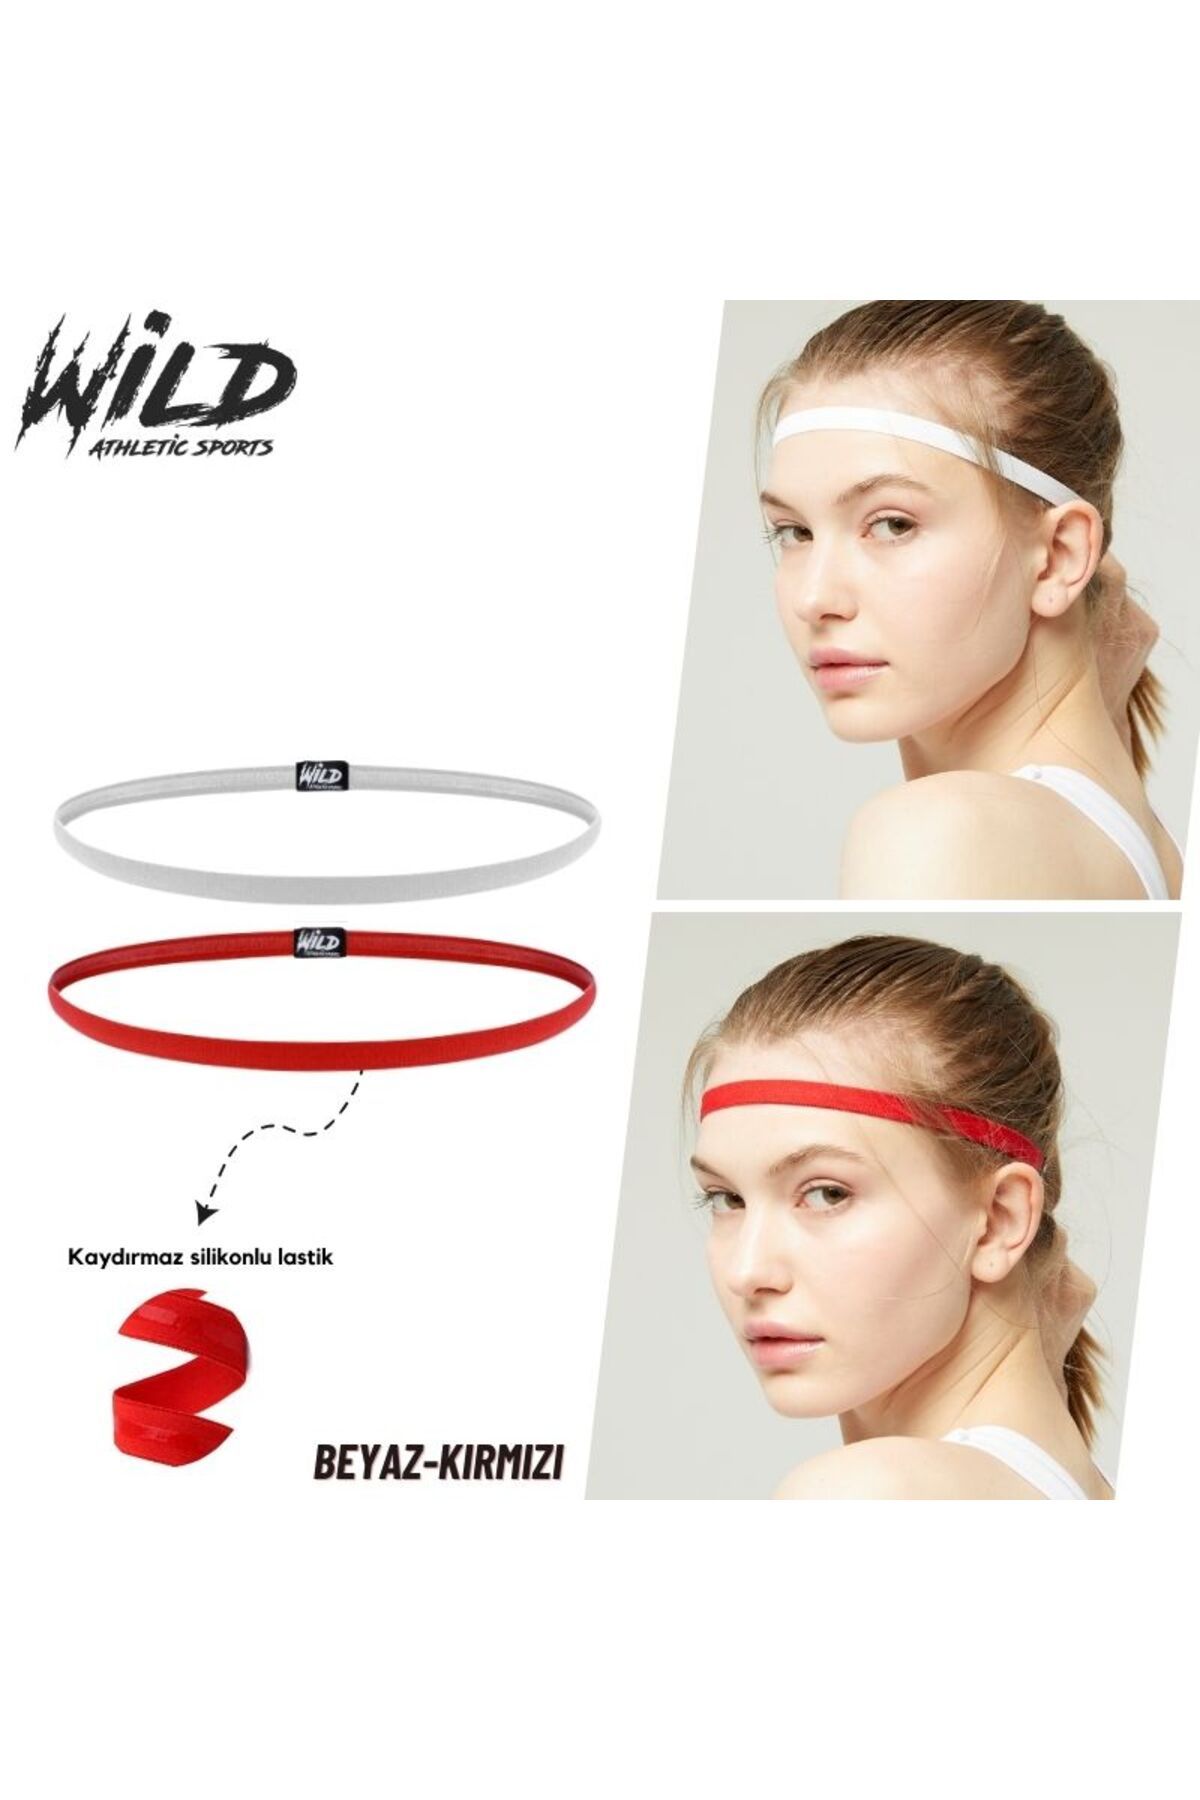 Wild Athletic Kaydırmaz Silikonlu Elastik Spor Futbol Saç Bandı Tokası Beyaz Kırmızı Ikili Wildflex